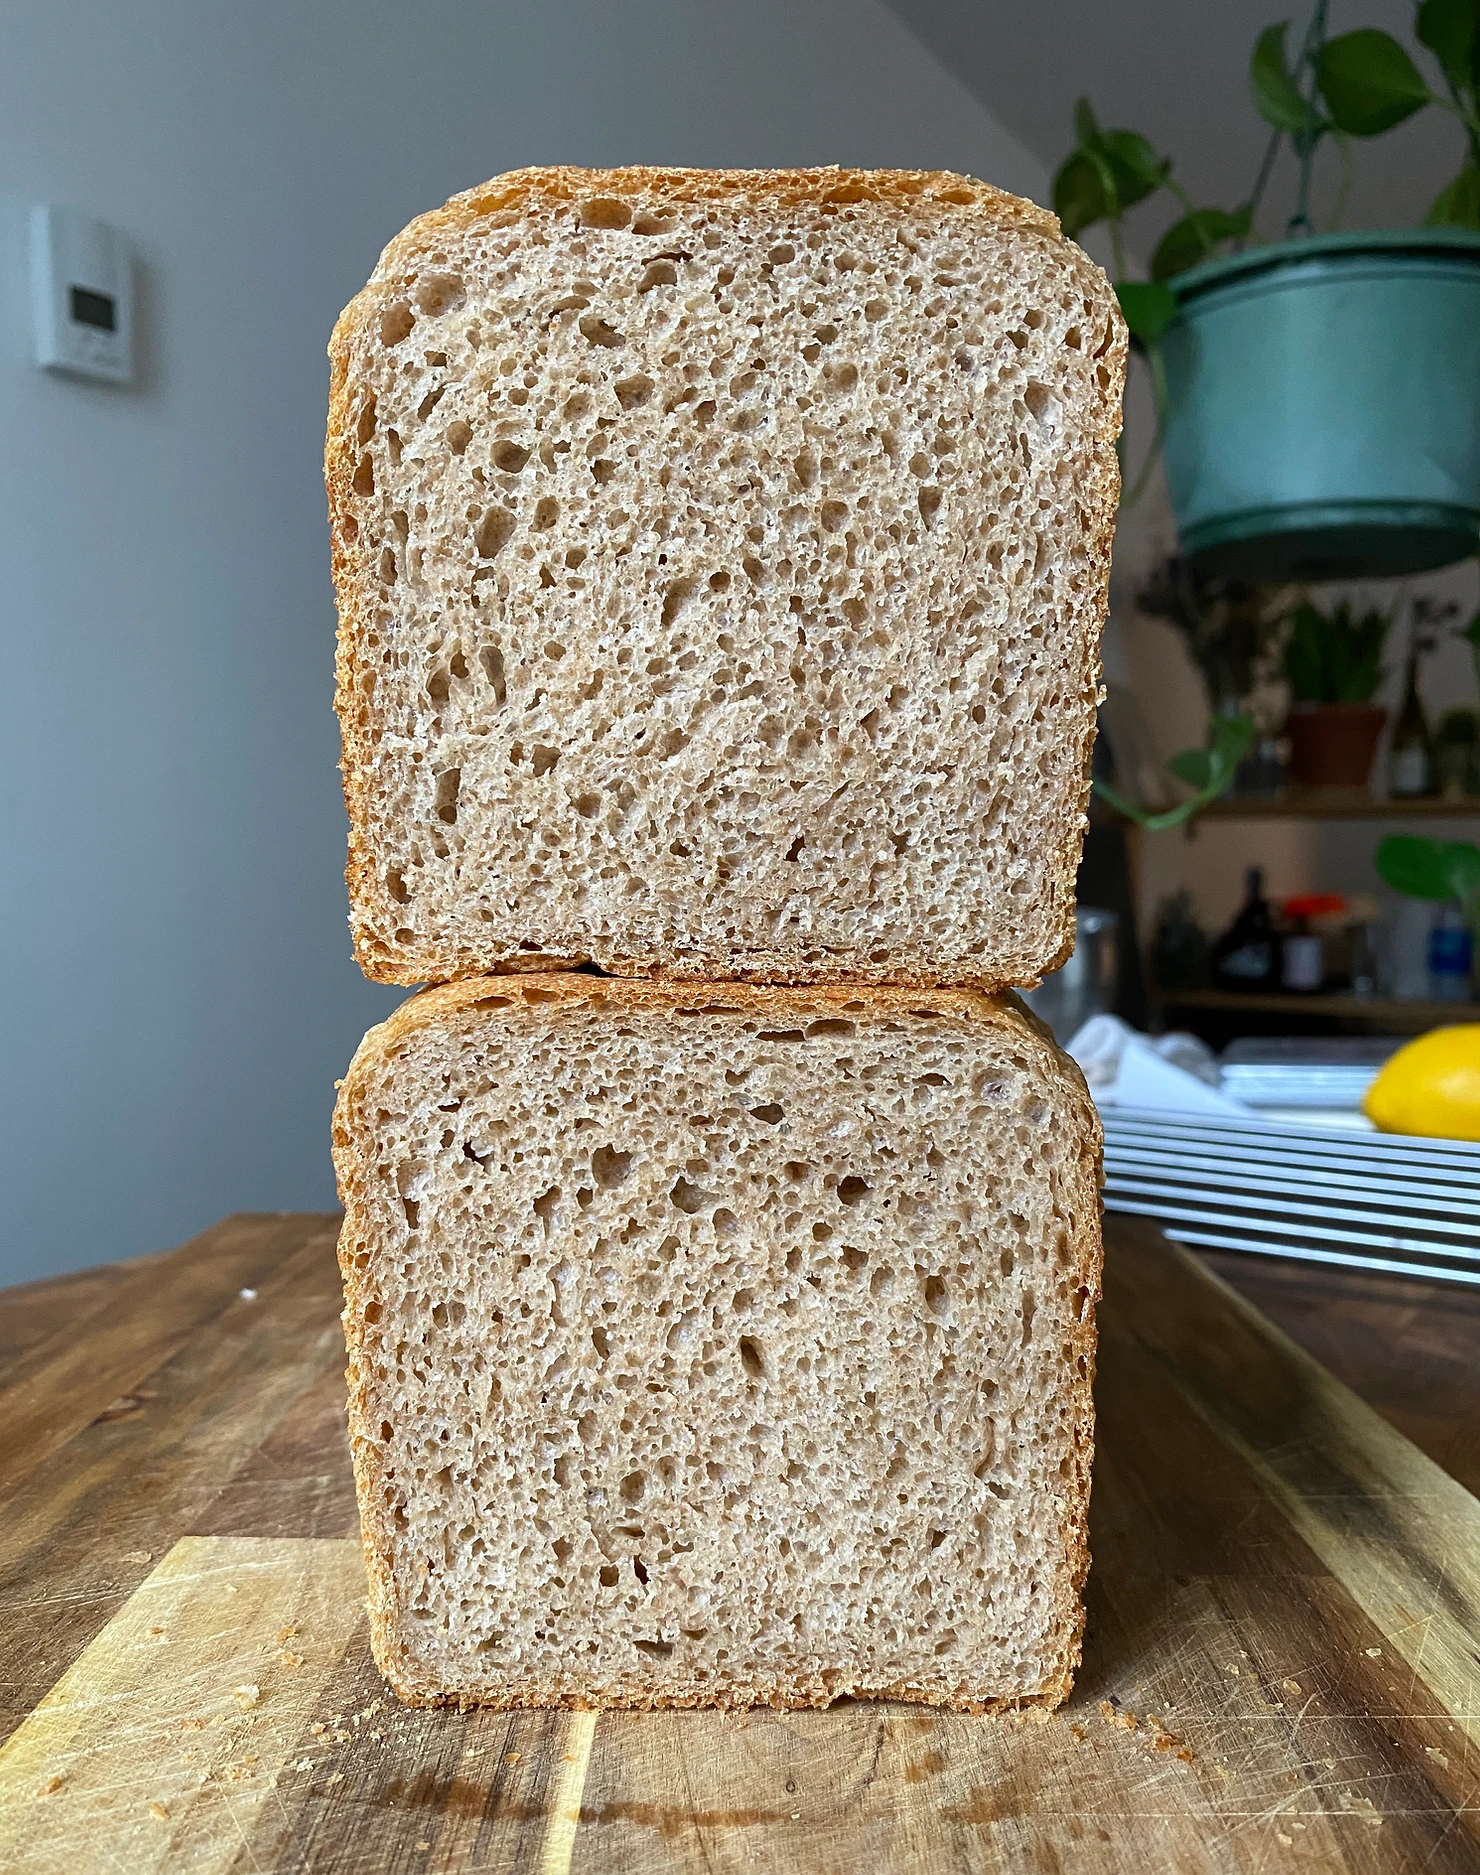 Picture for Spelt Sandwich Bread